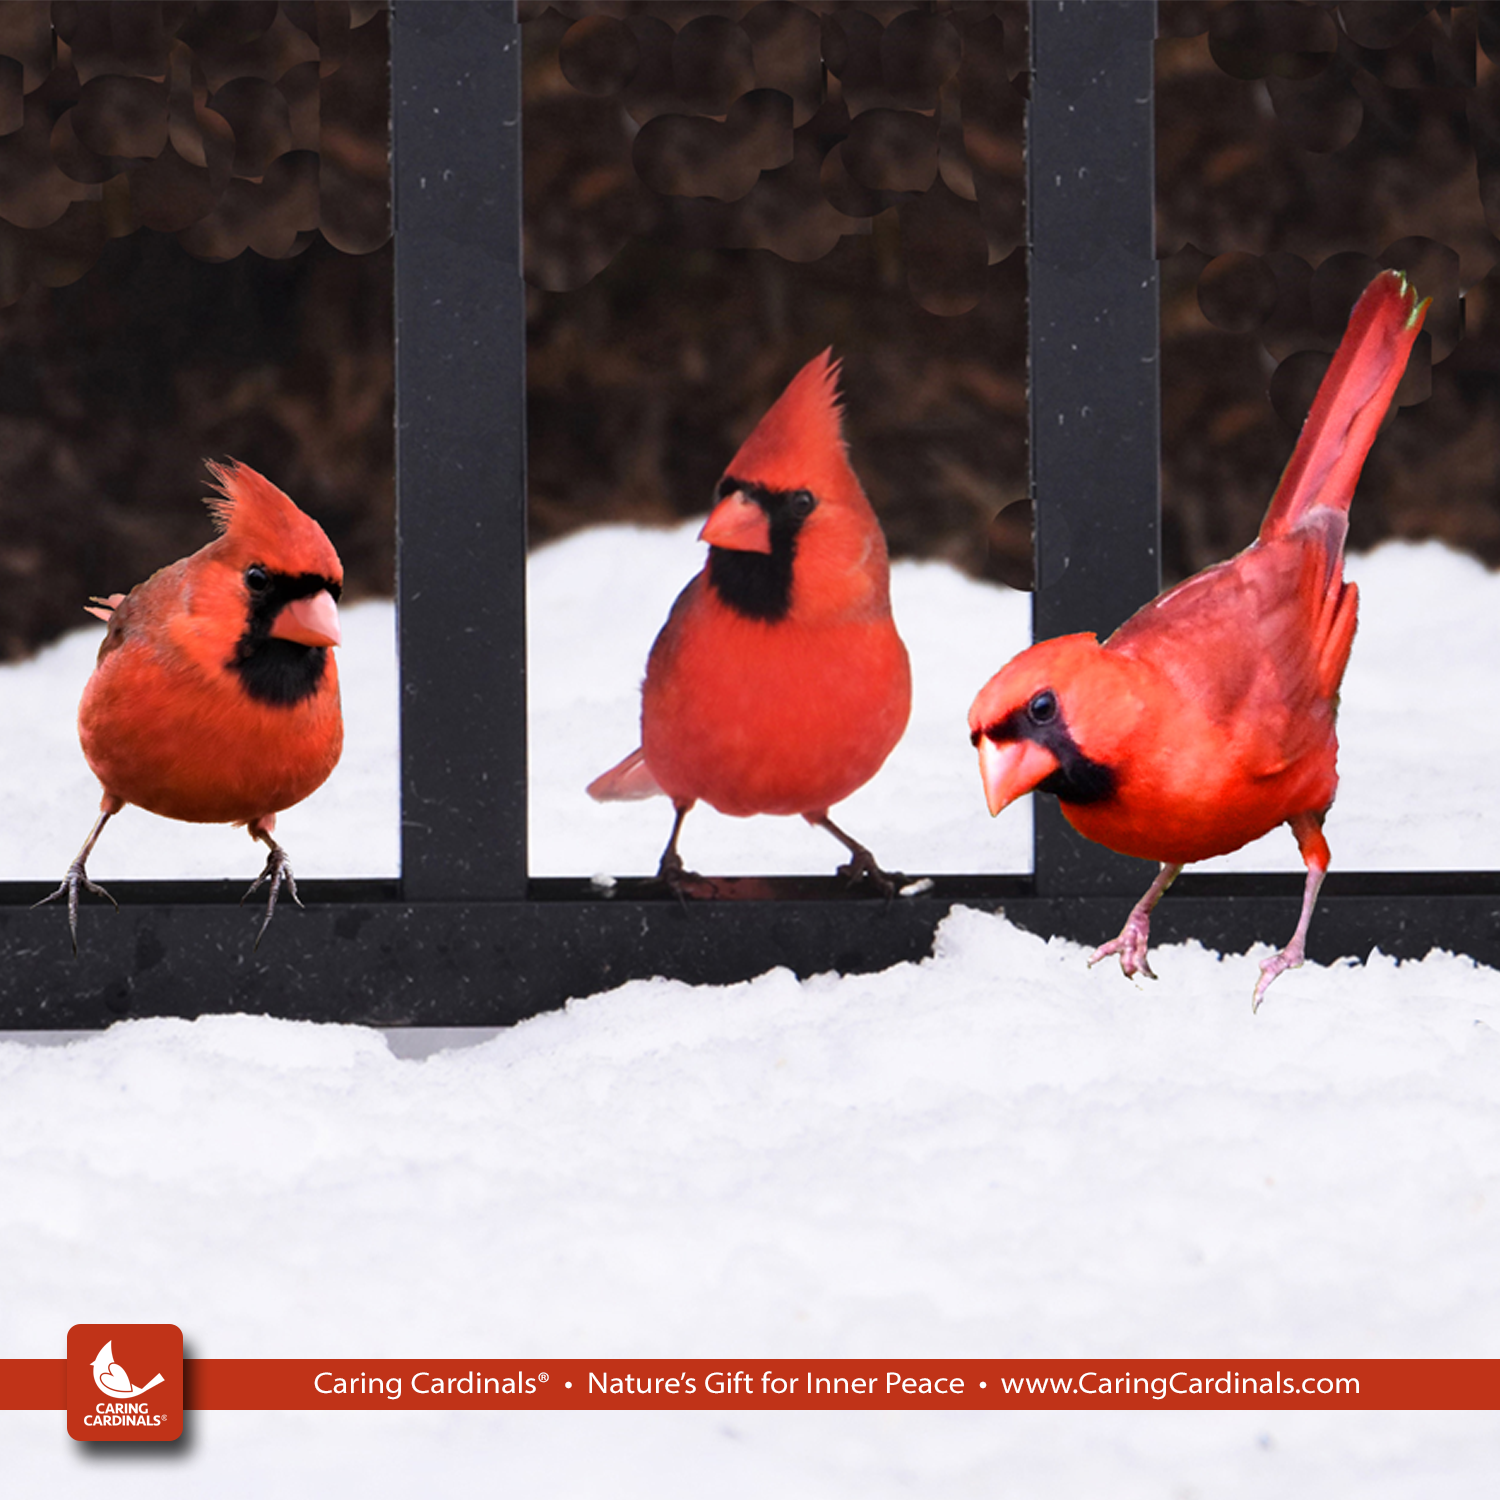 St. Louis Cardinals Newborn & Infant Gray/White/Red Three-Piece